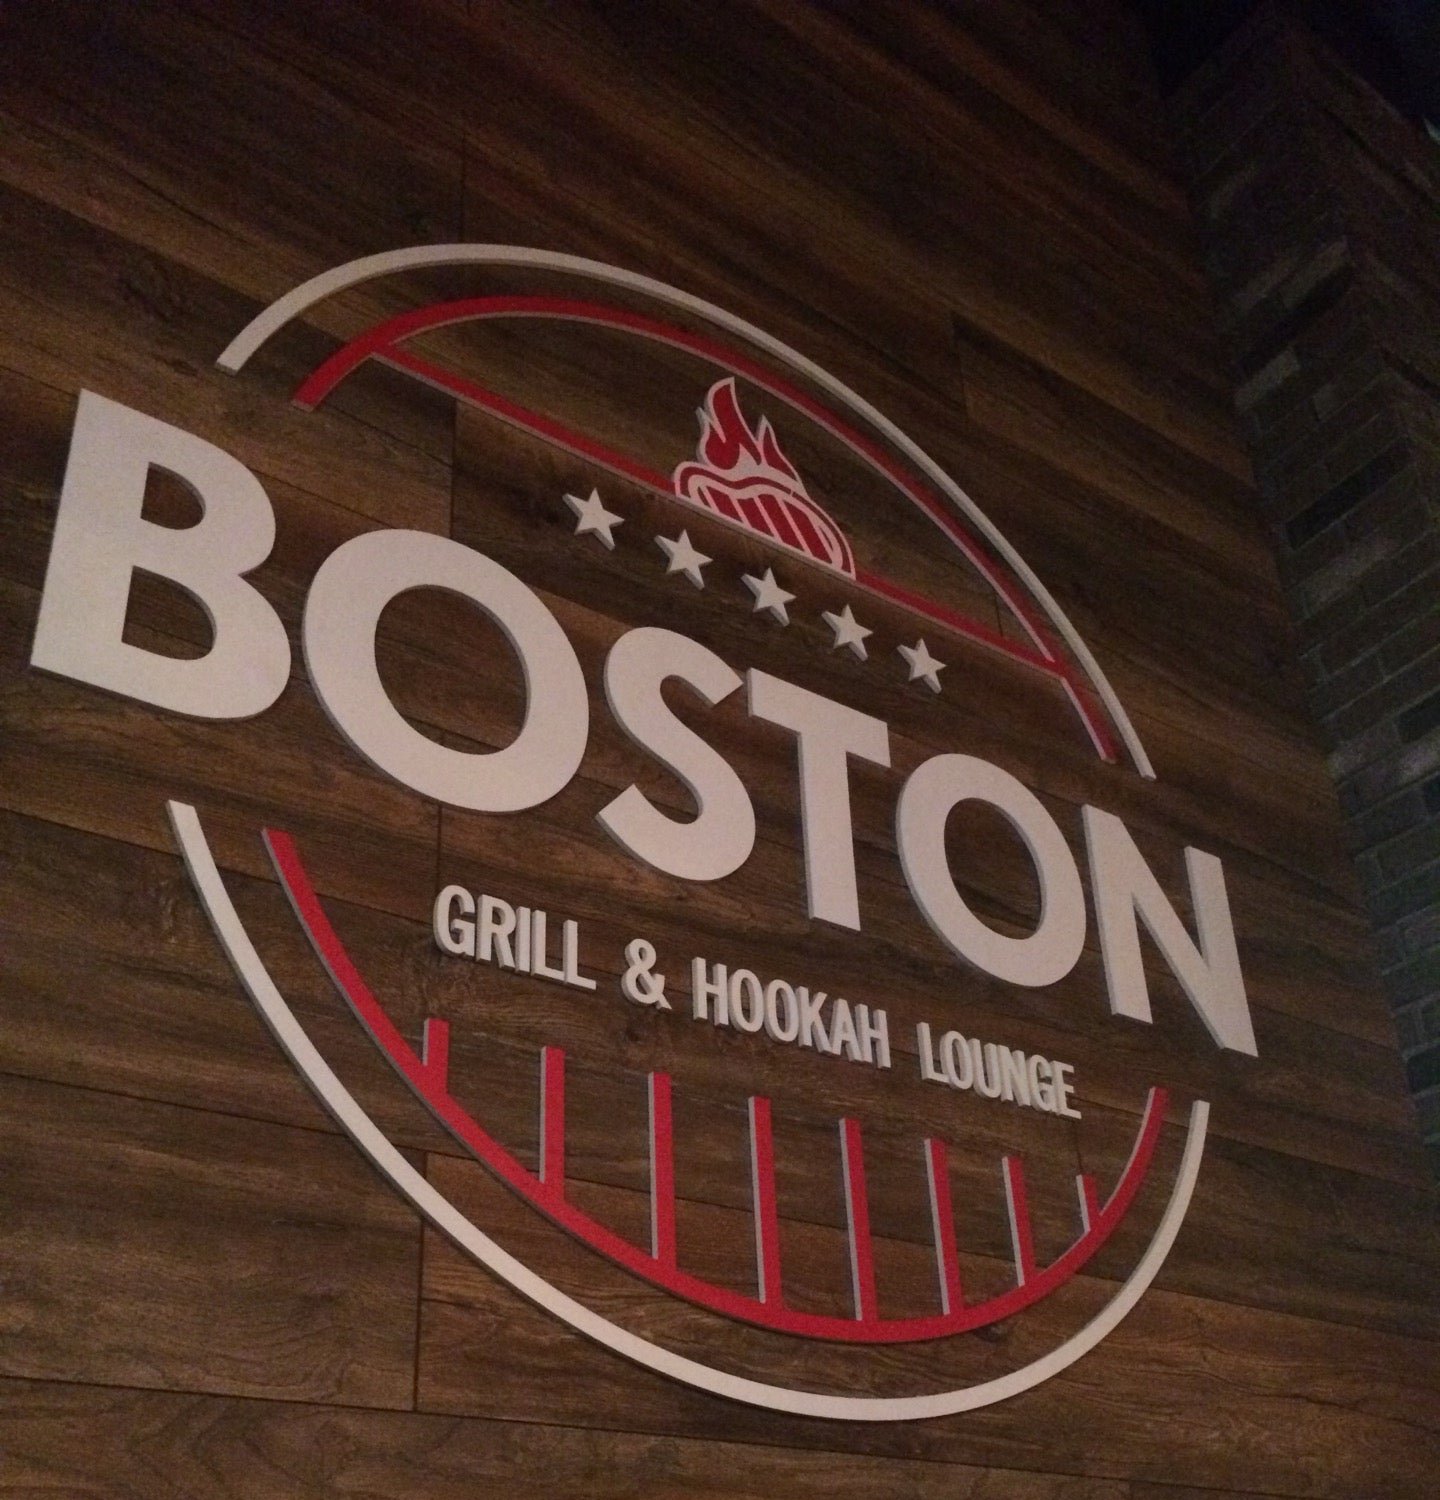 бостон ресторан фото